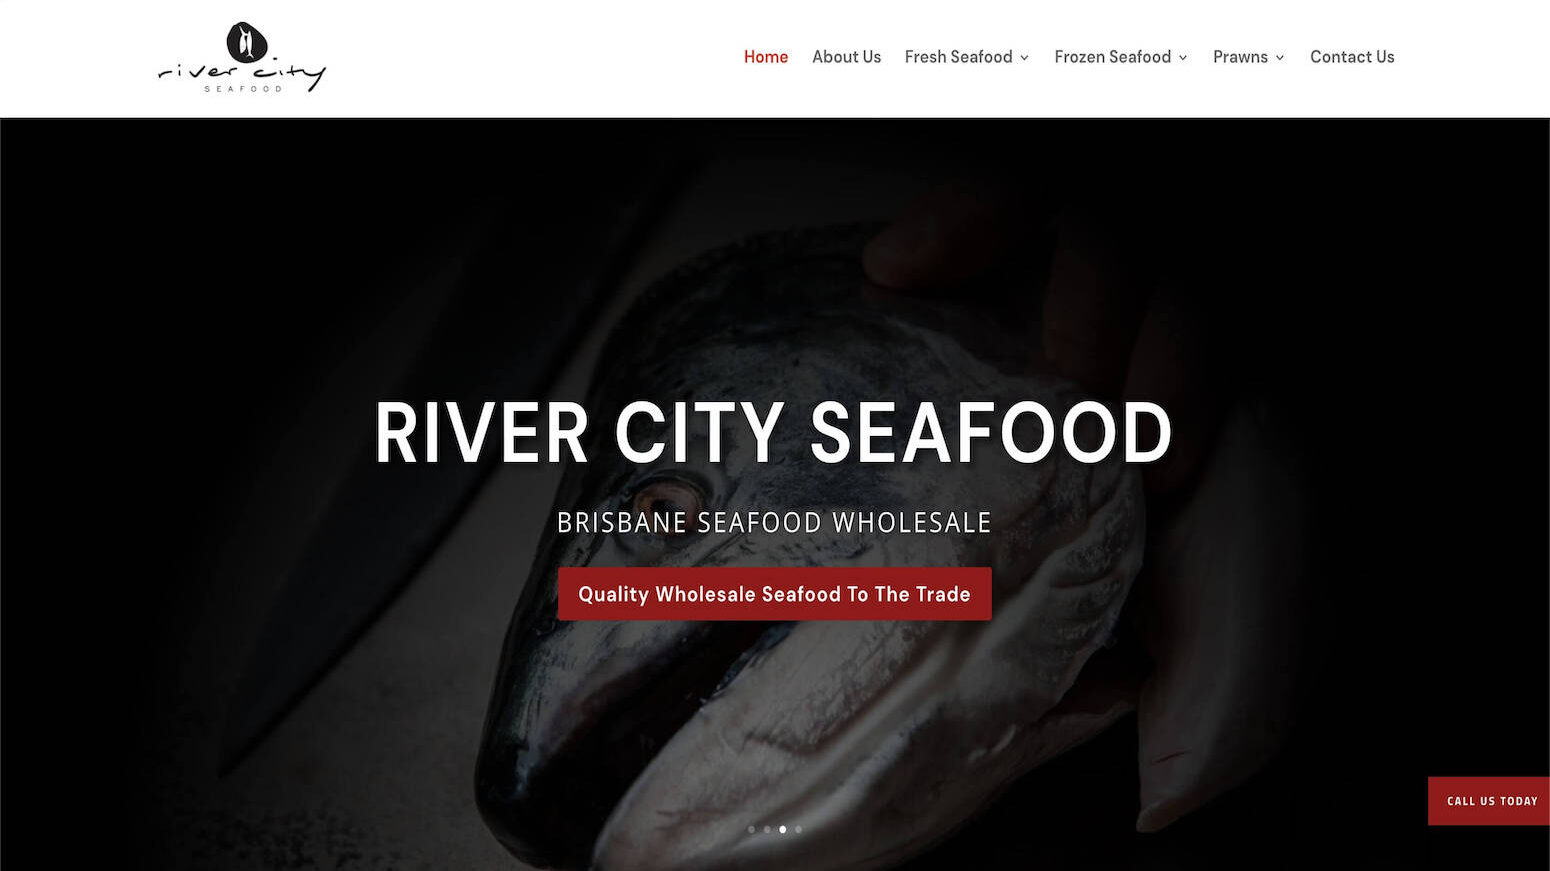 Brisbane Seafood Wholesale River City Seafood Website